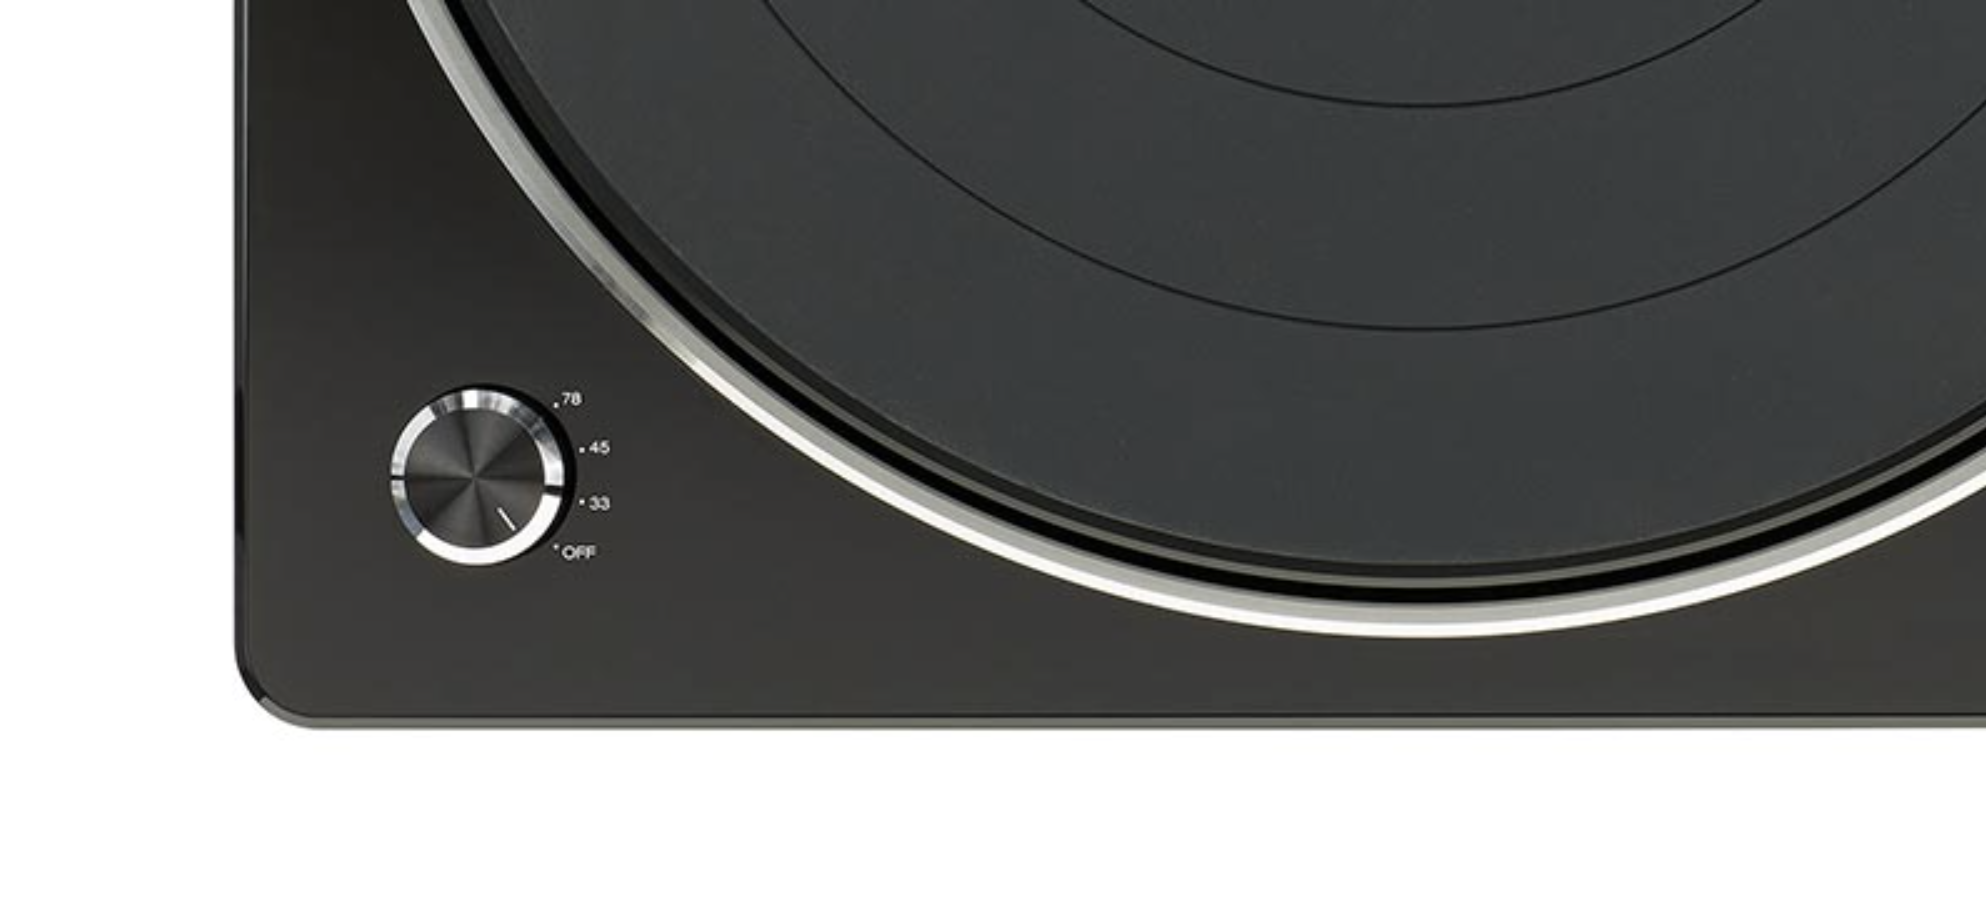 denon-dp-450usb-turntable-speed-selector-vinyl-revival.png